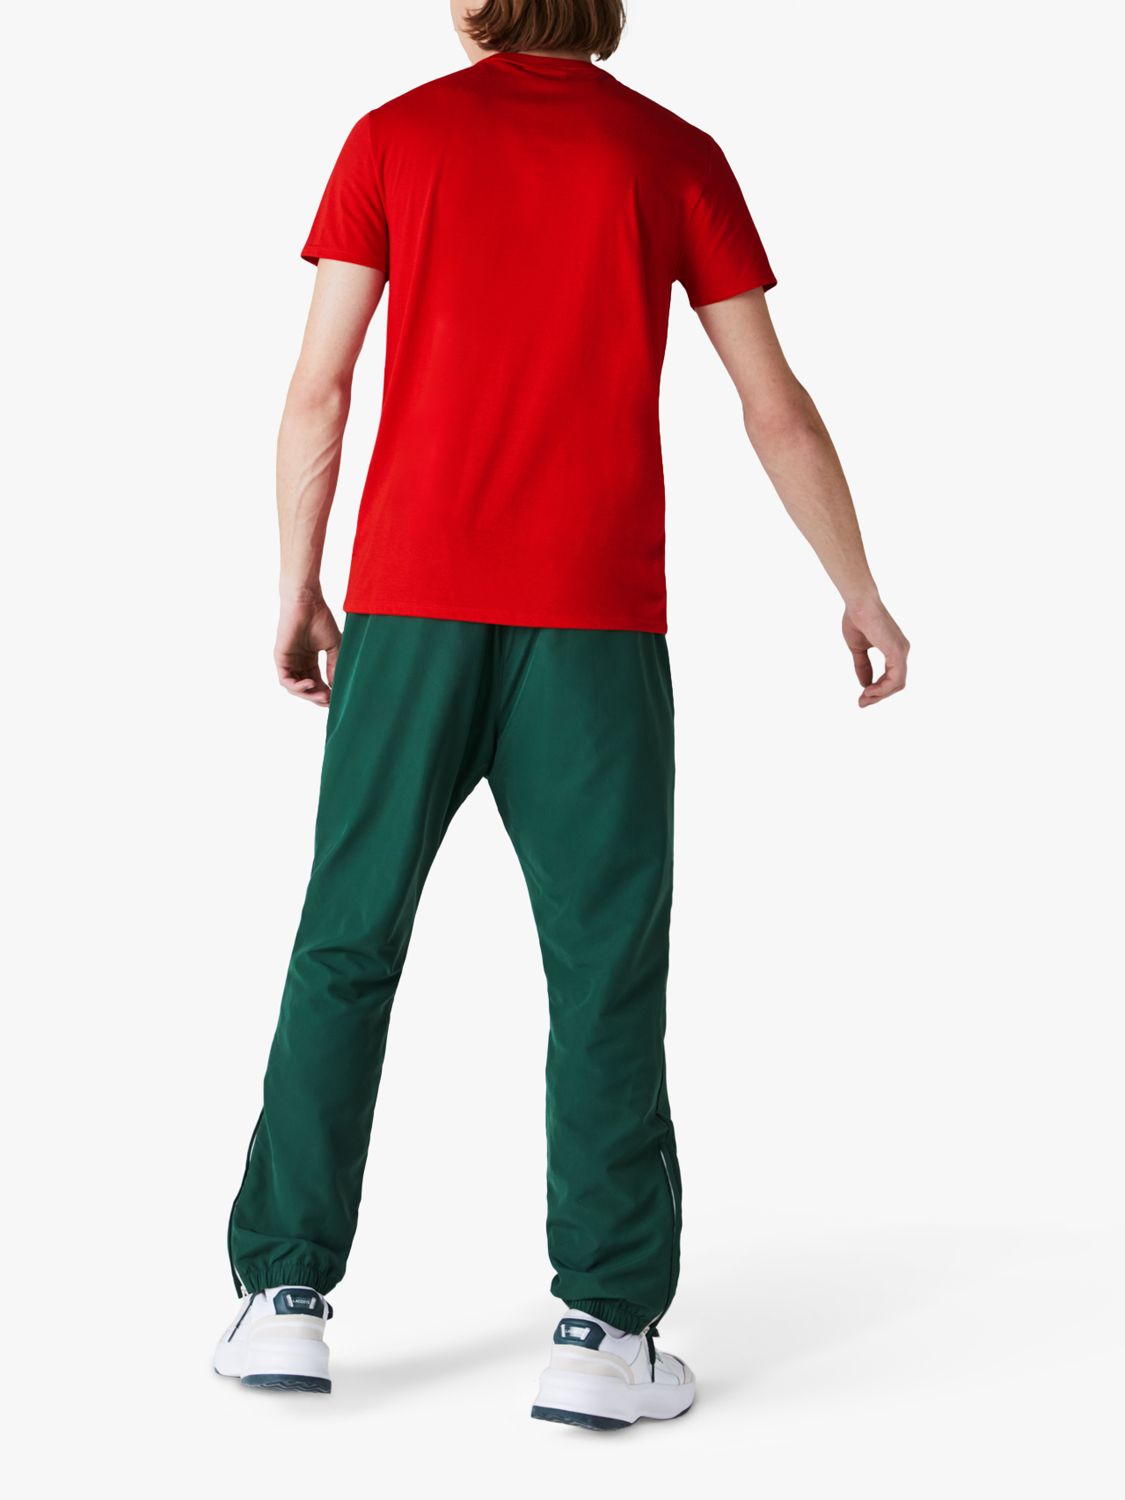 Lacoste Pima Crew Neck T-Shirt, Red, S